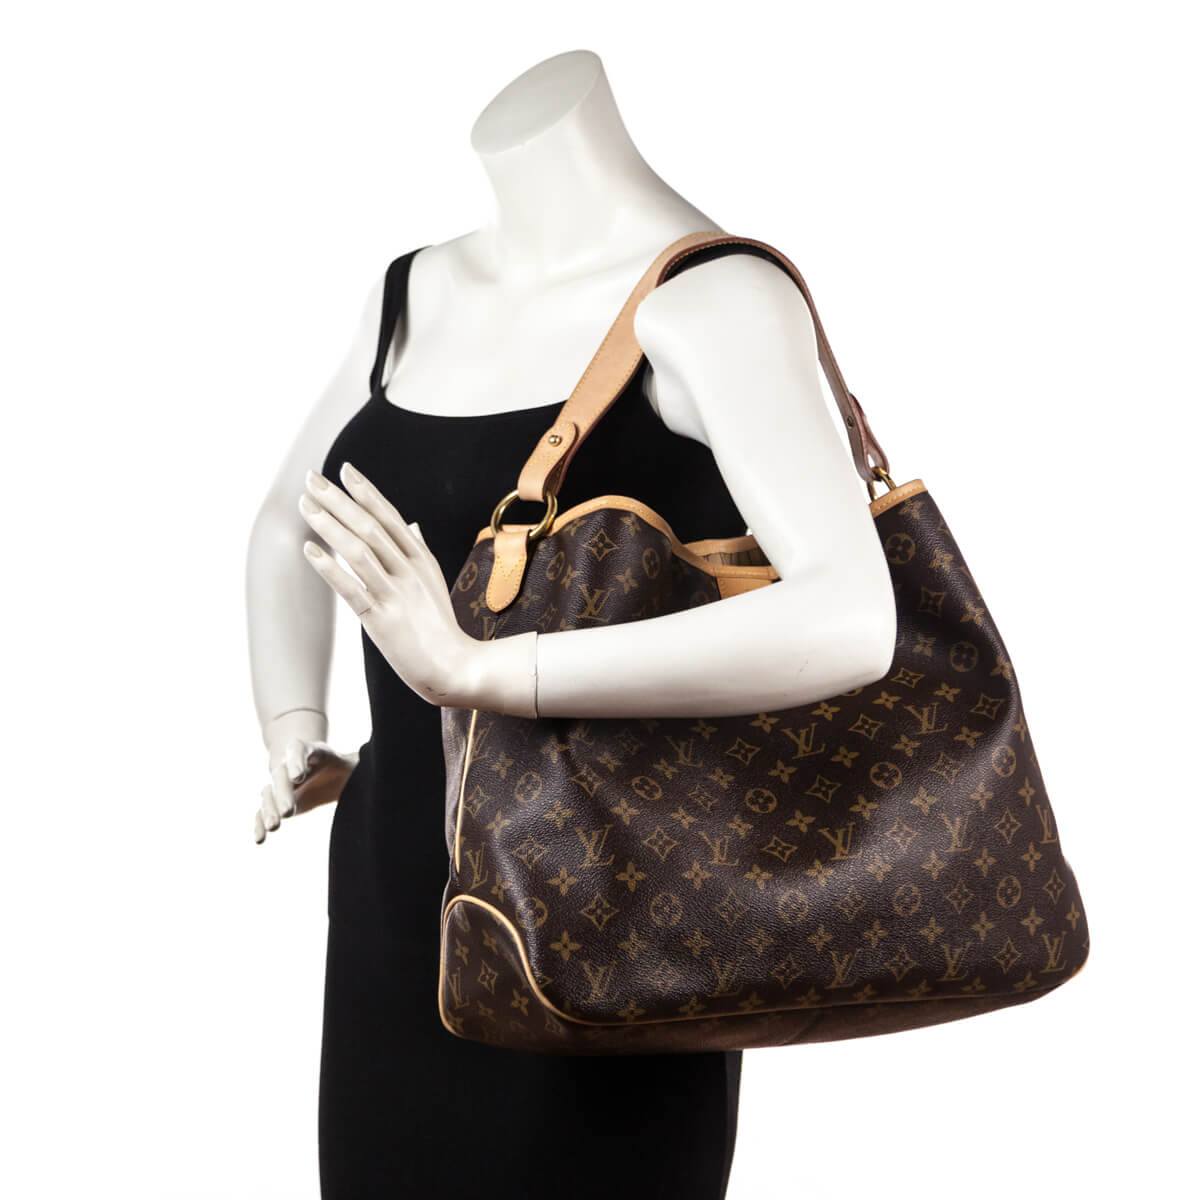 Louis Vuitton Monogram Delightful Mm Bag